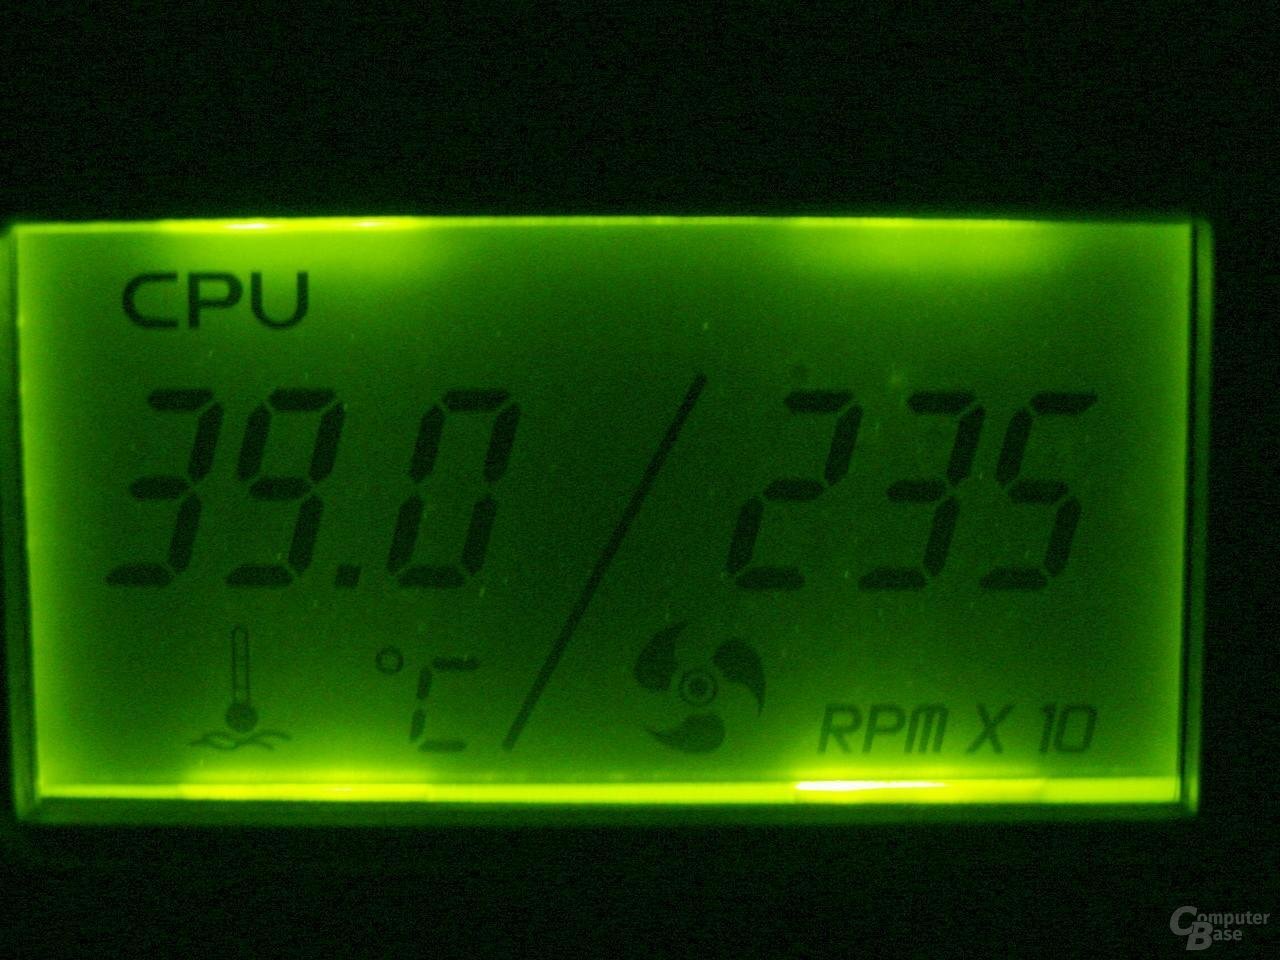 NXP-101 - Display